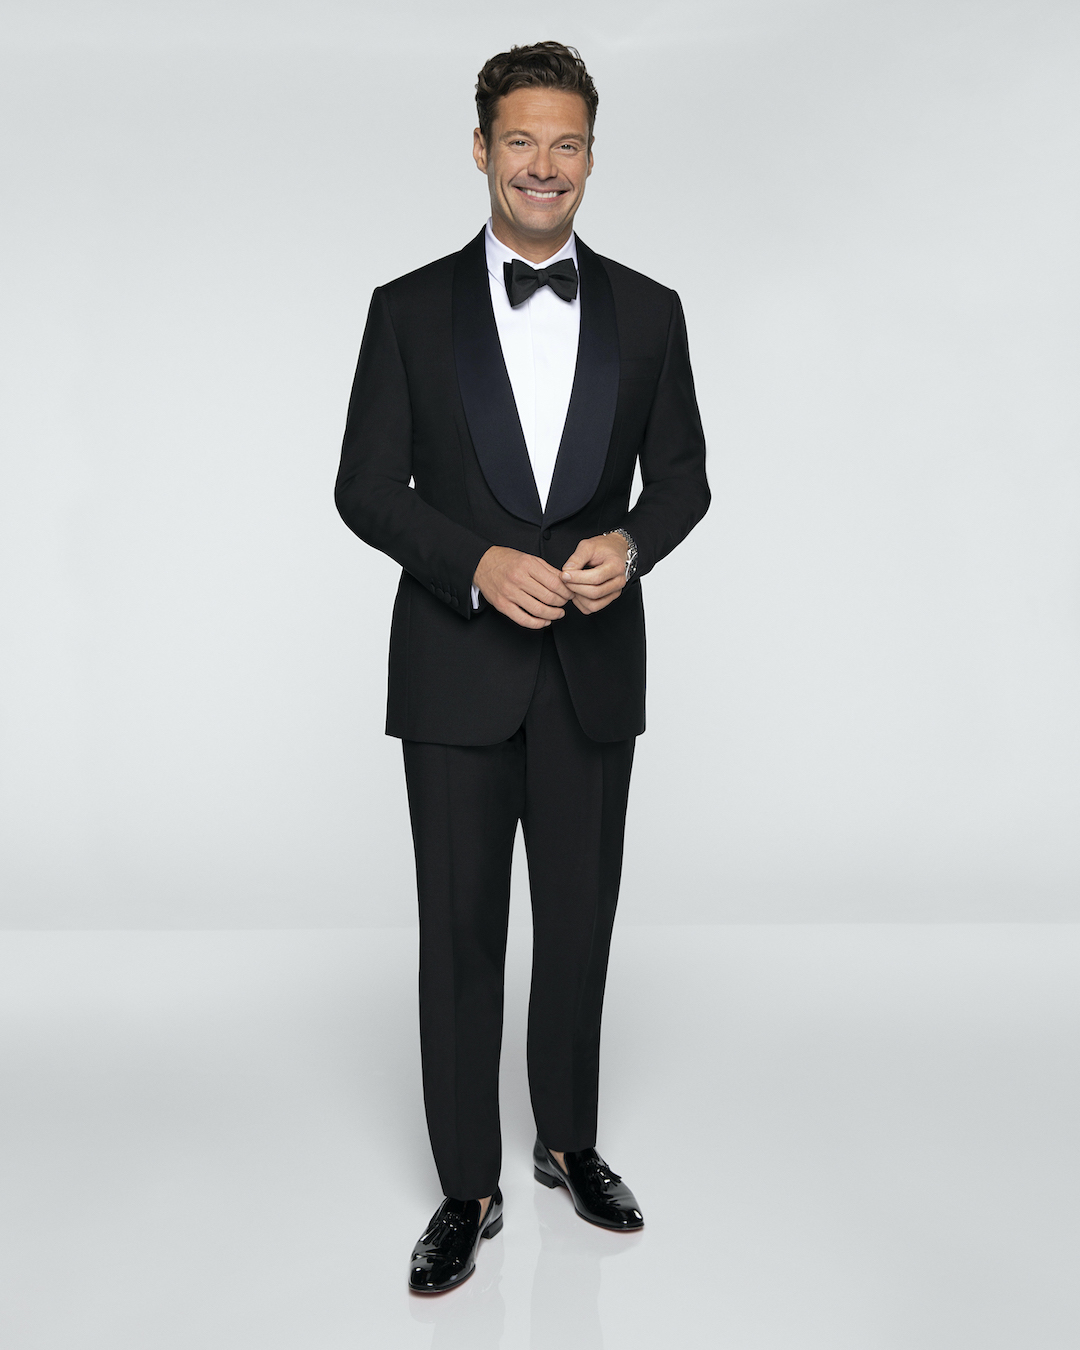 Ryan Seacrest (NBCUniversal photo)